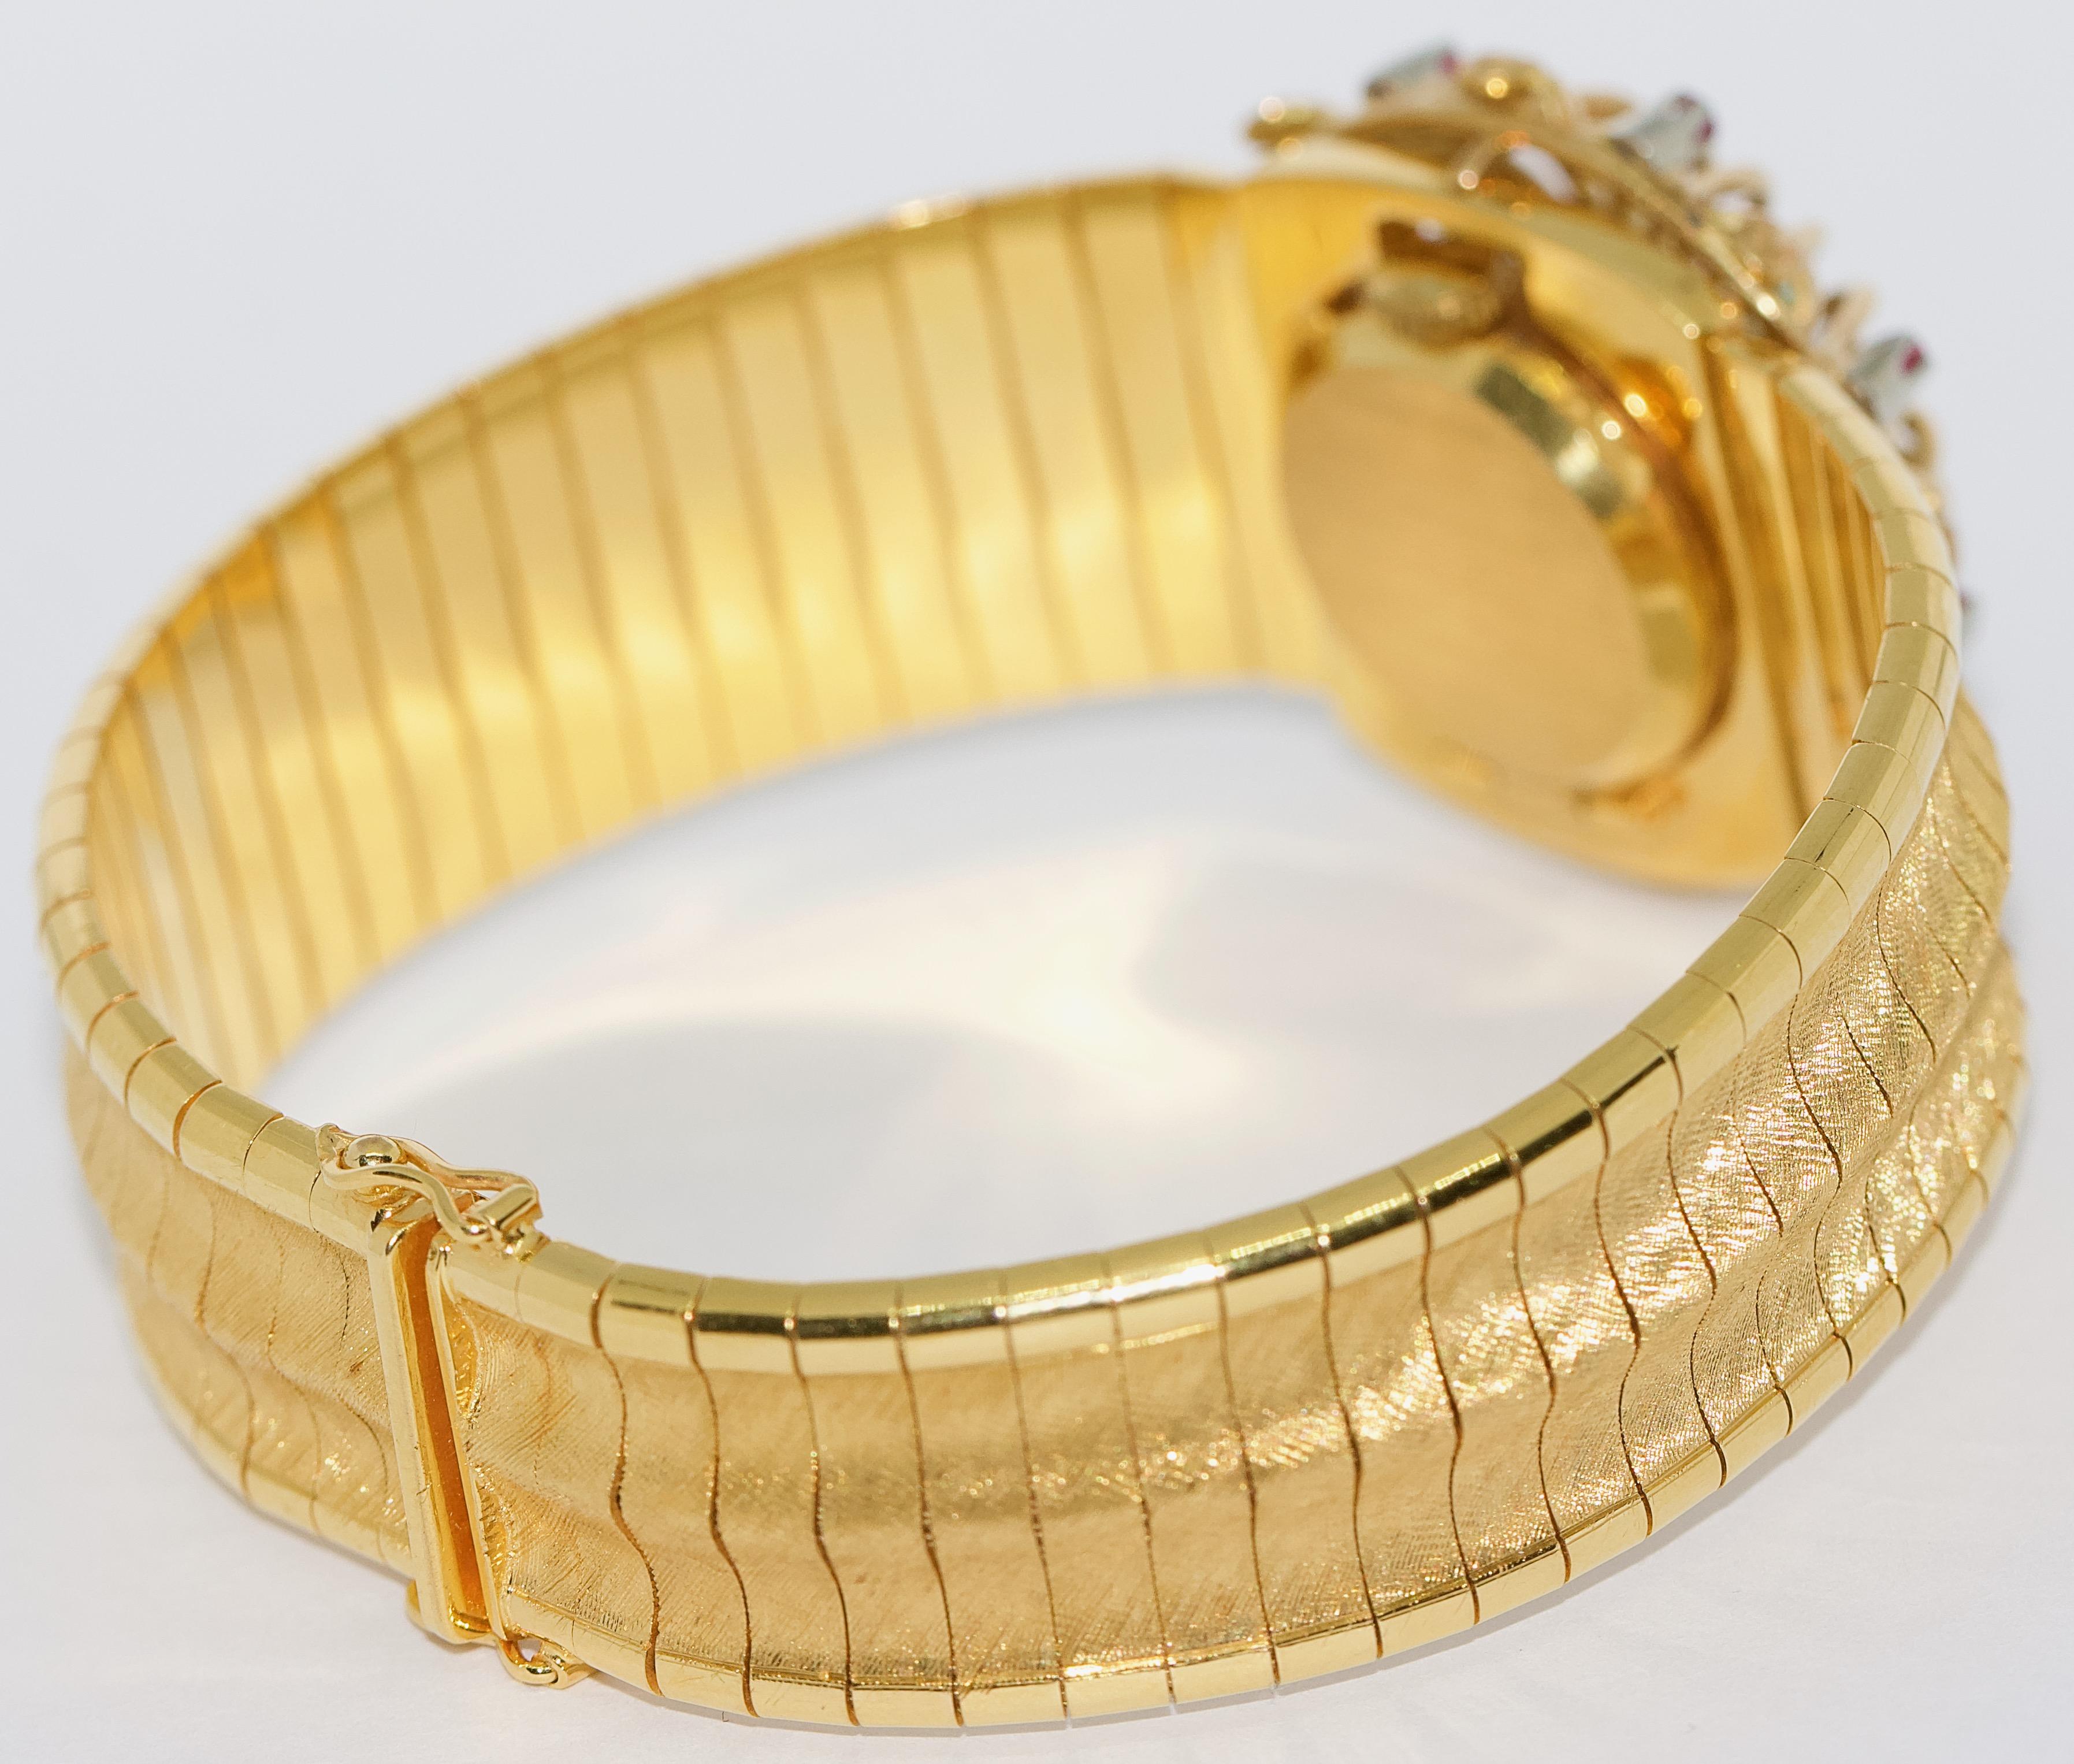 Massive Ladies Wristwatch, Bracelet, 18 Karat Gold, with Rubies and Emerald In Good Condition For Sale In Berlin, DE